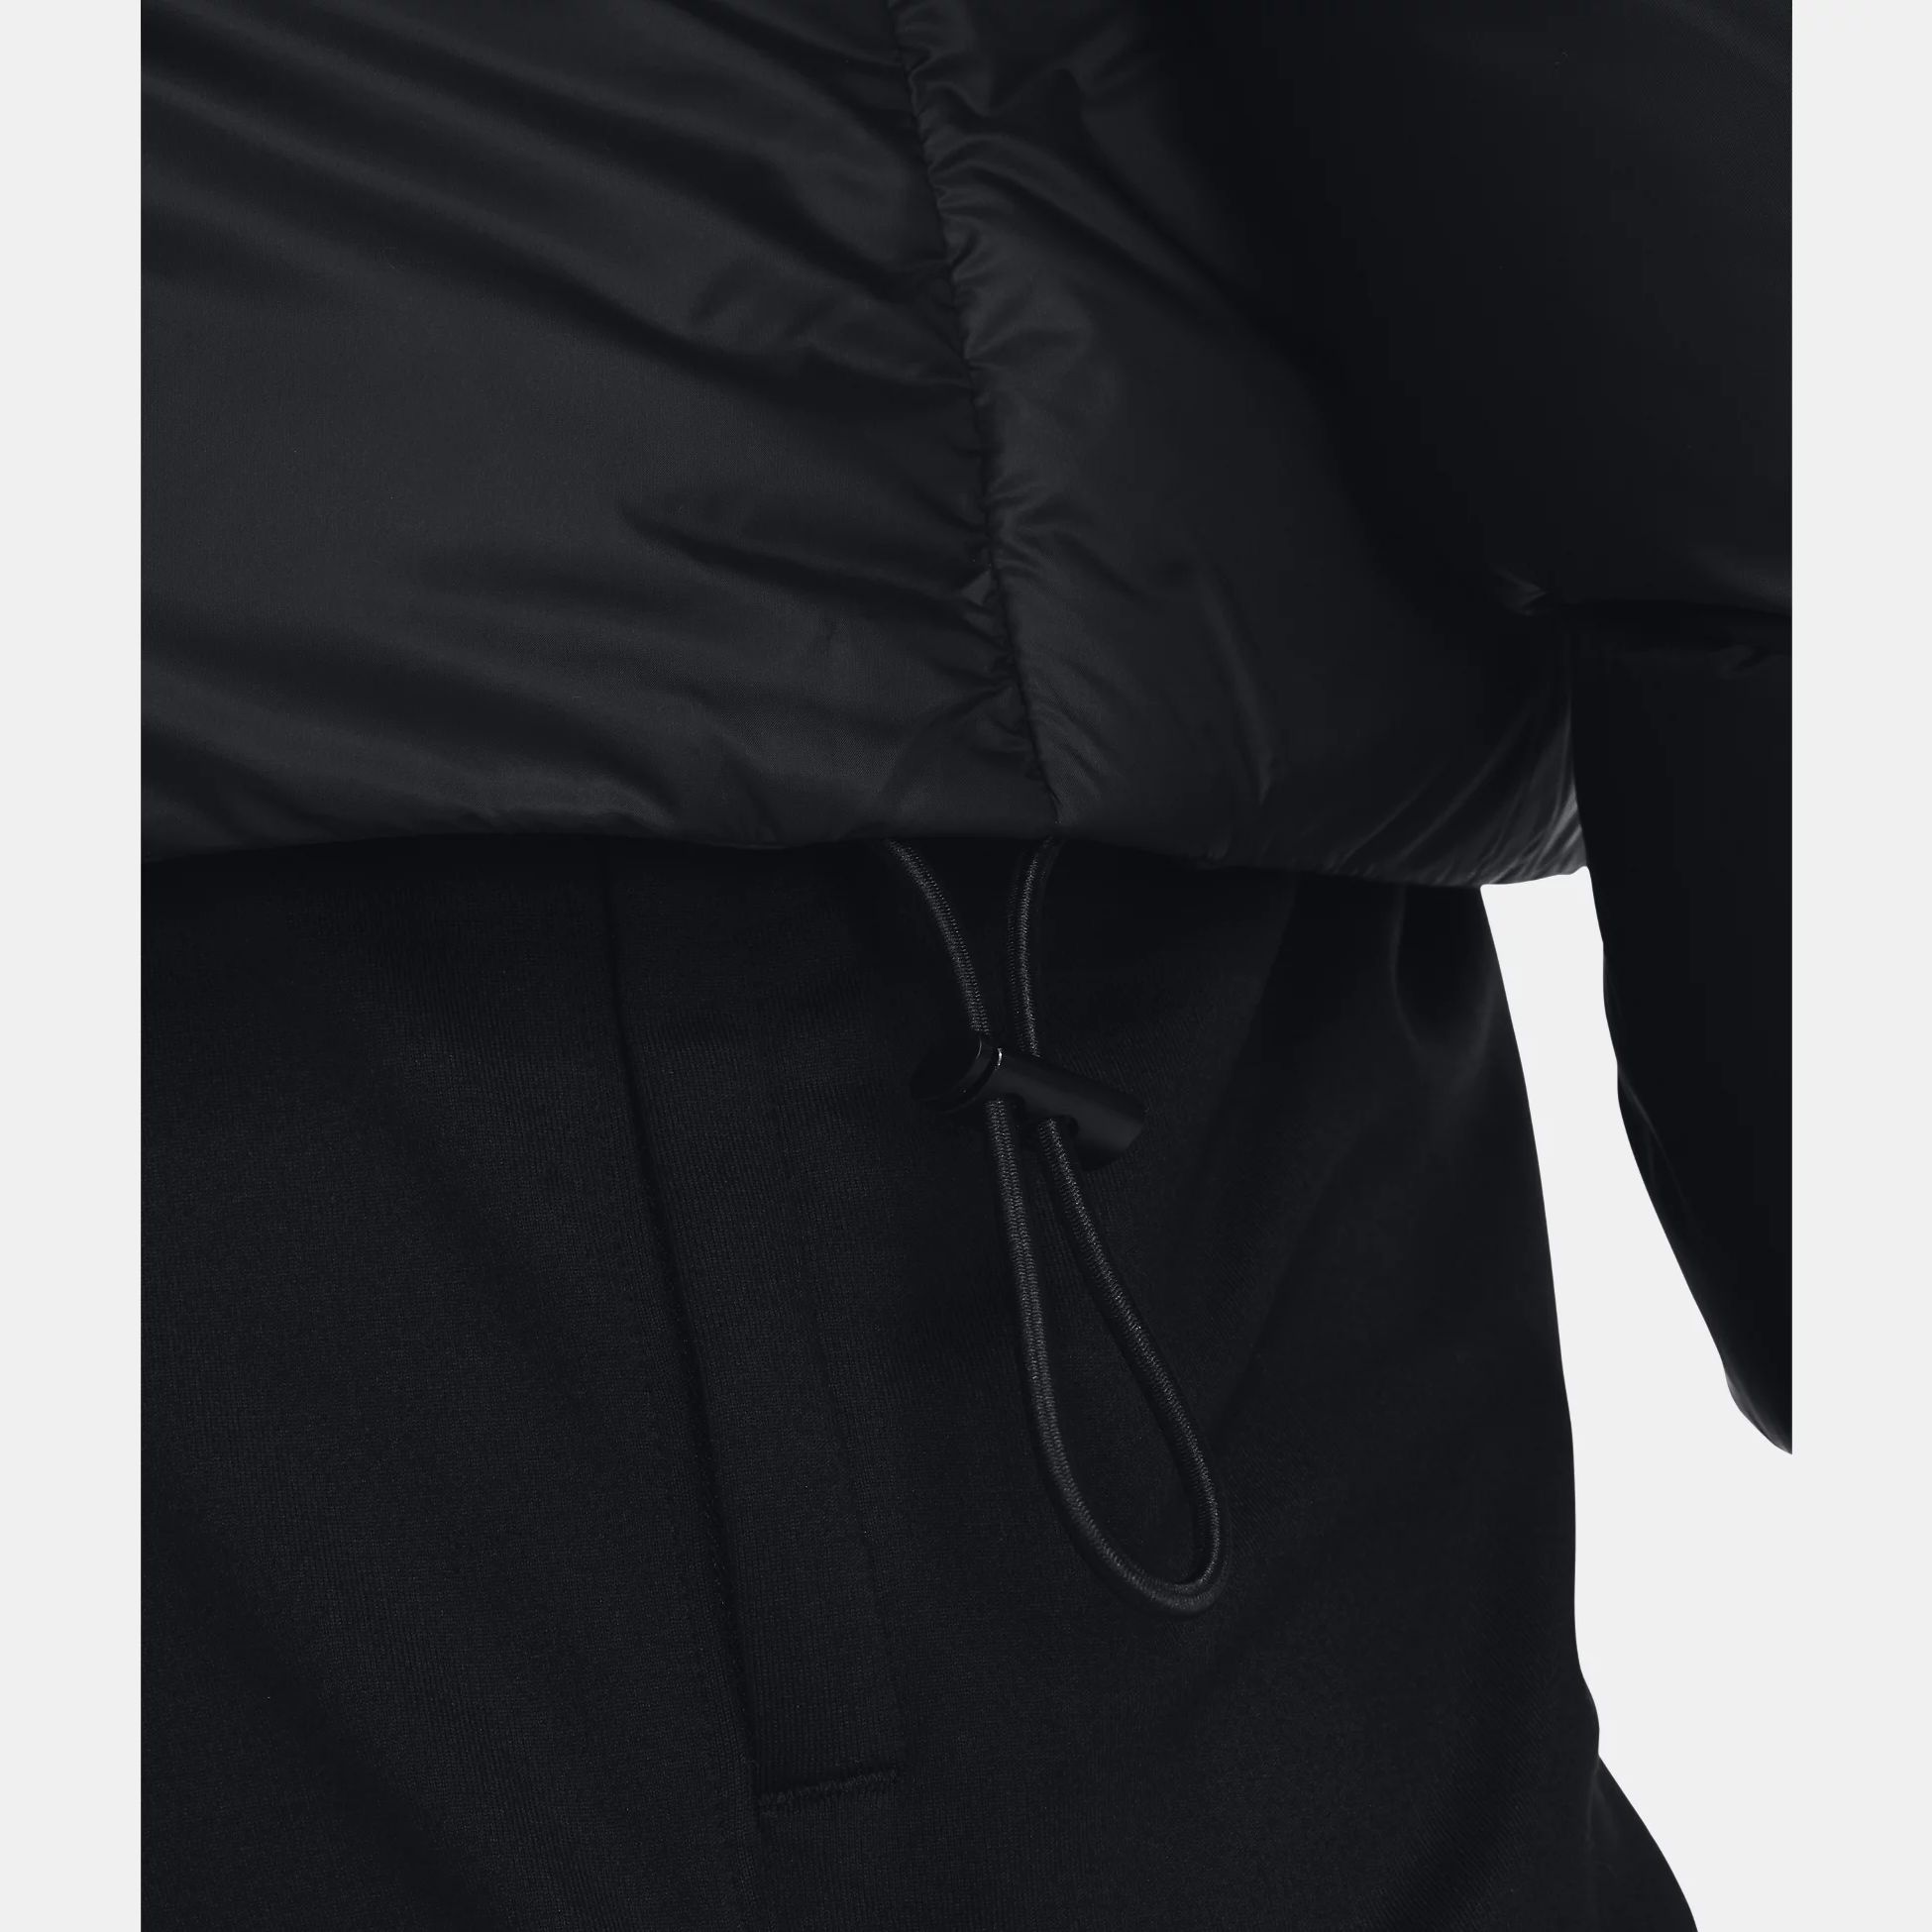 Jackets & Vests -  under armour UA Storm ColdGear Infrared Down Jacket